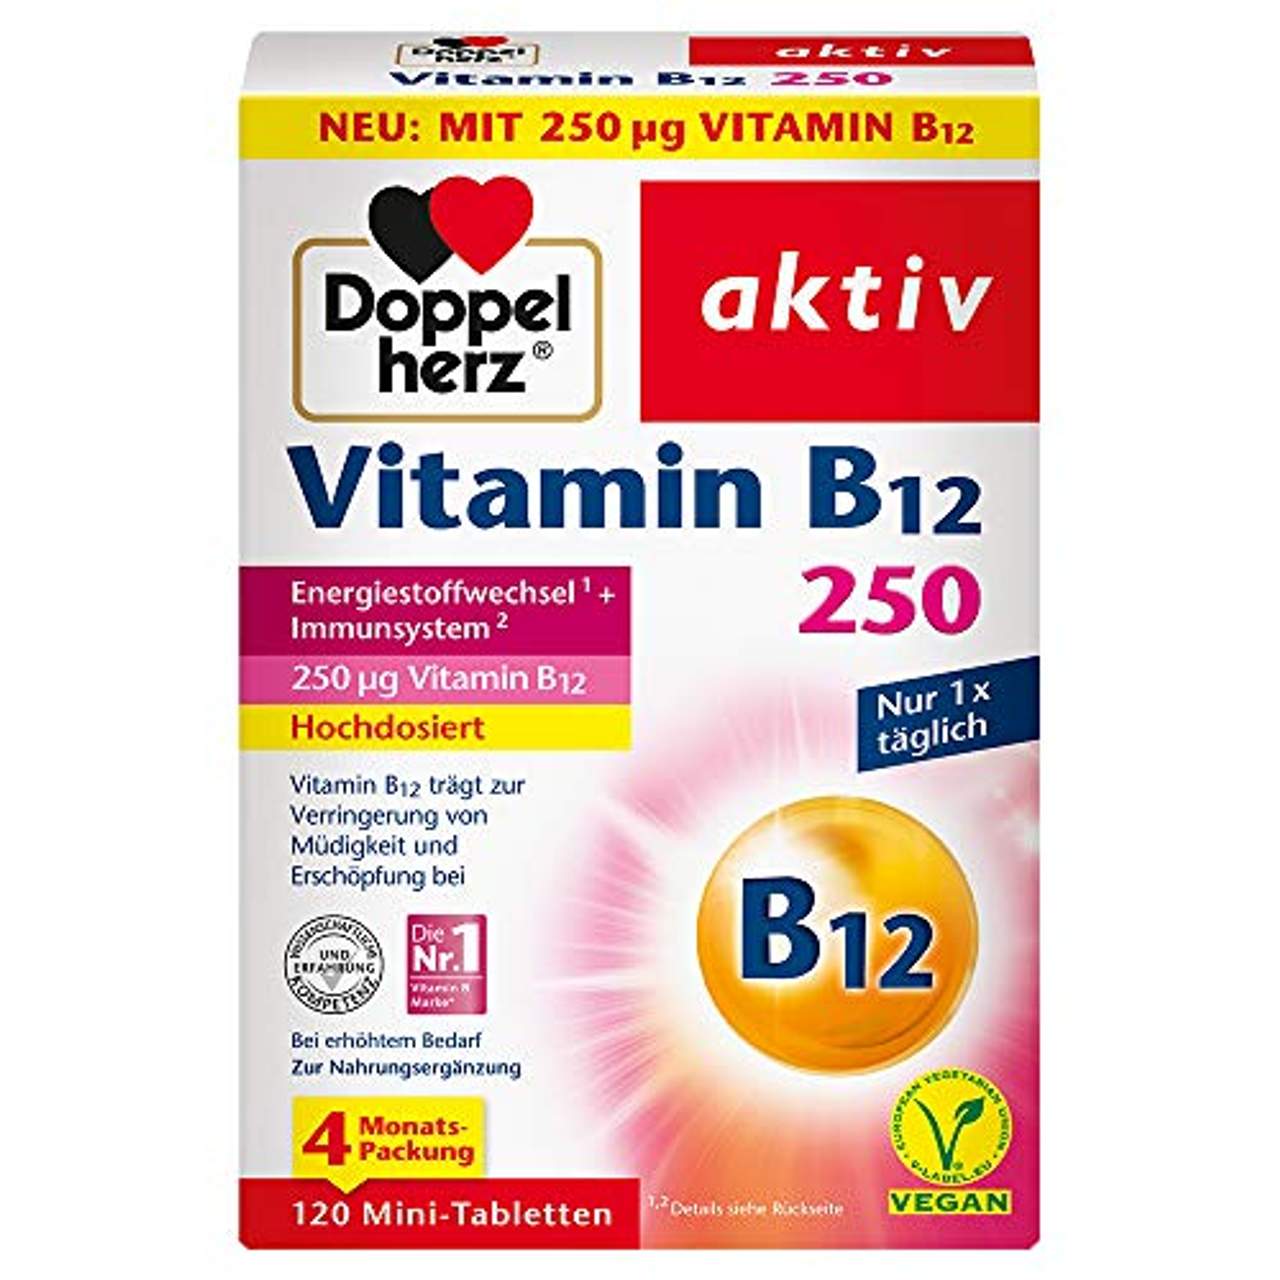 Doppelherz Vitamin B12 Vitamin B12 trägt